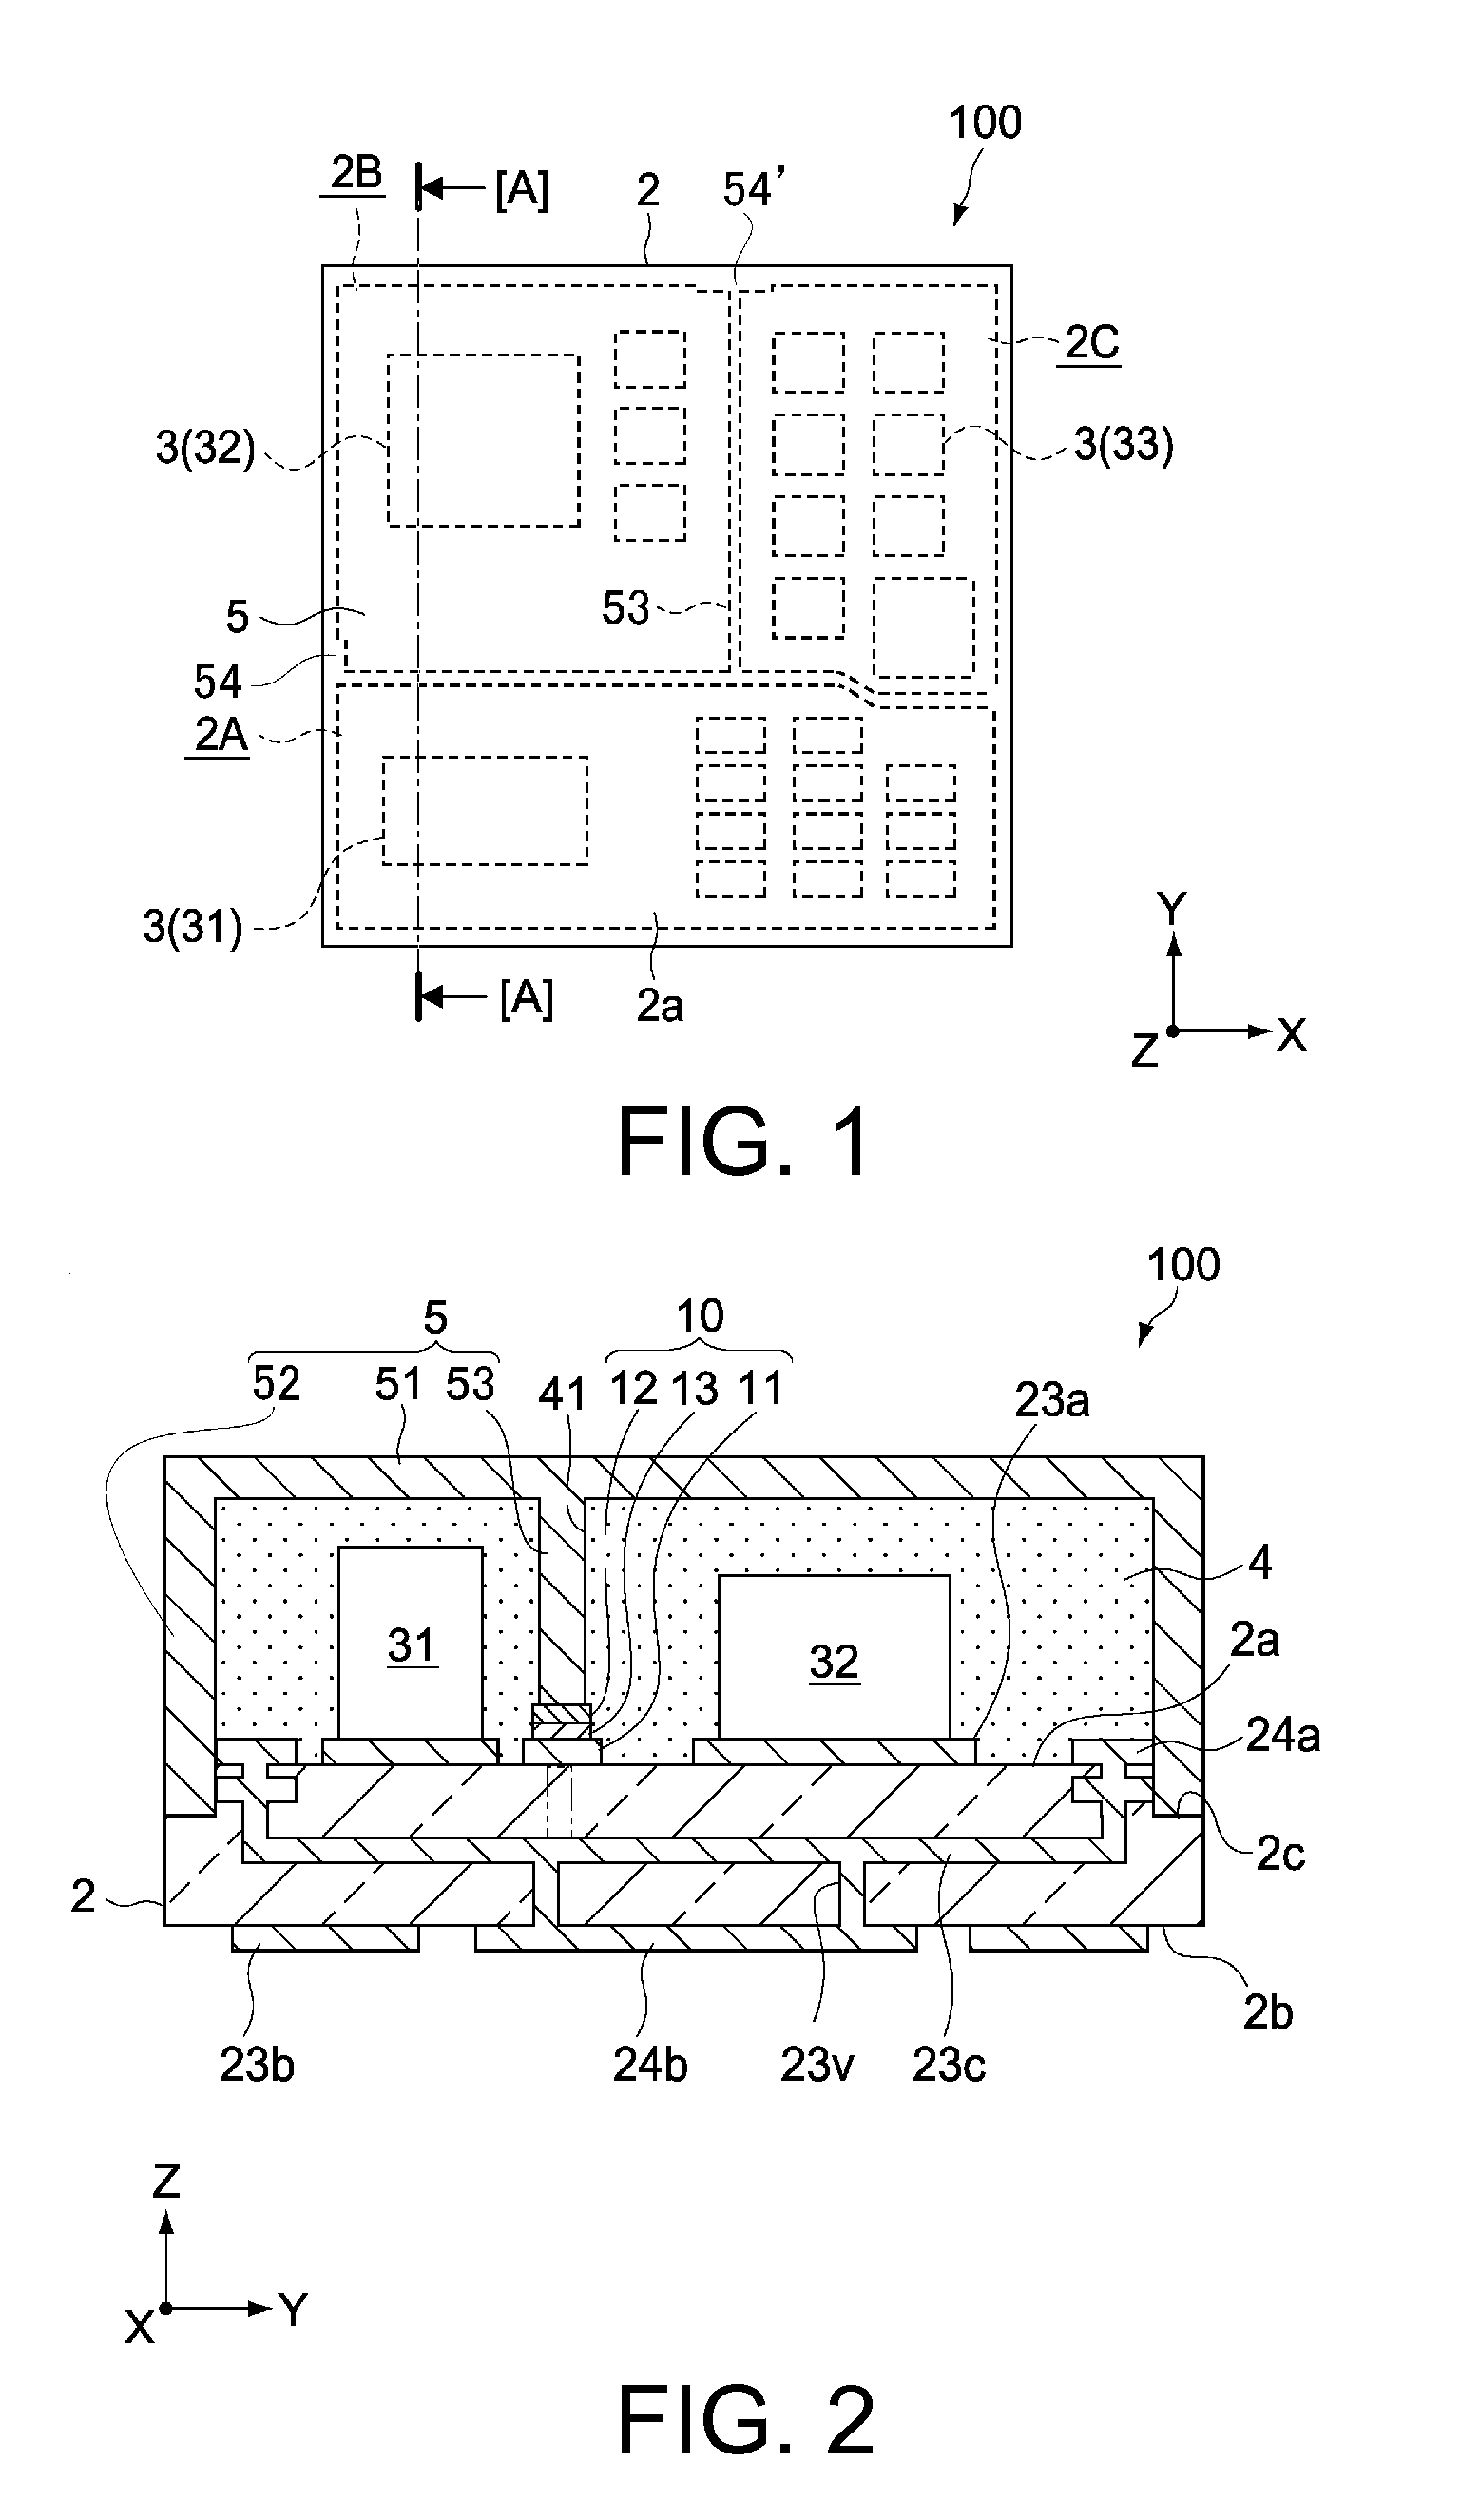 Circuit module and method of manufacturing same